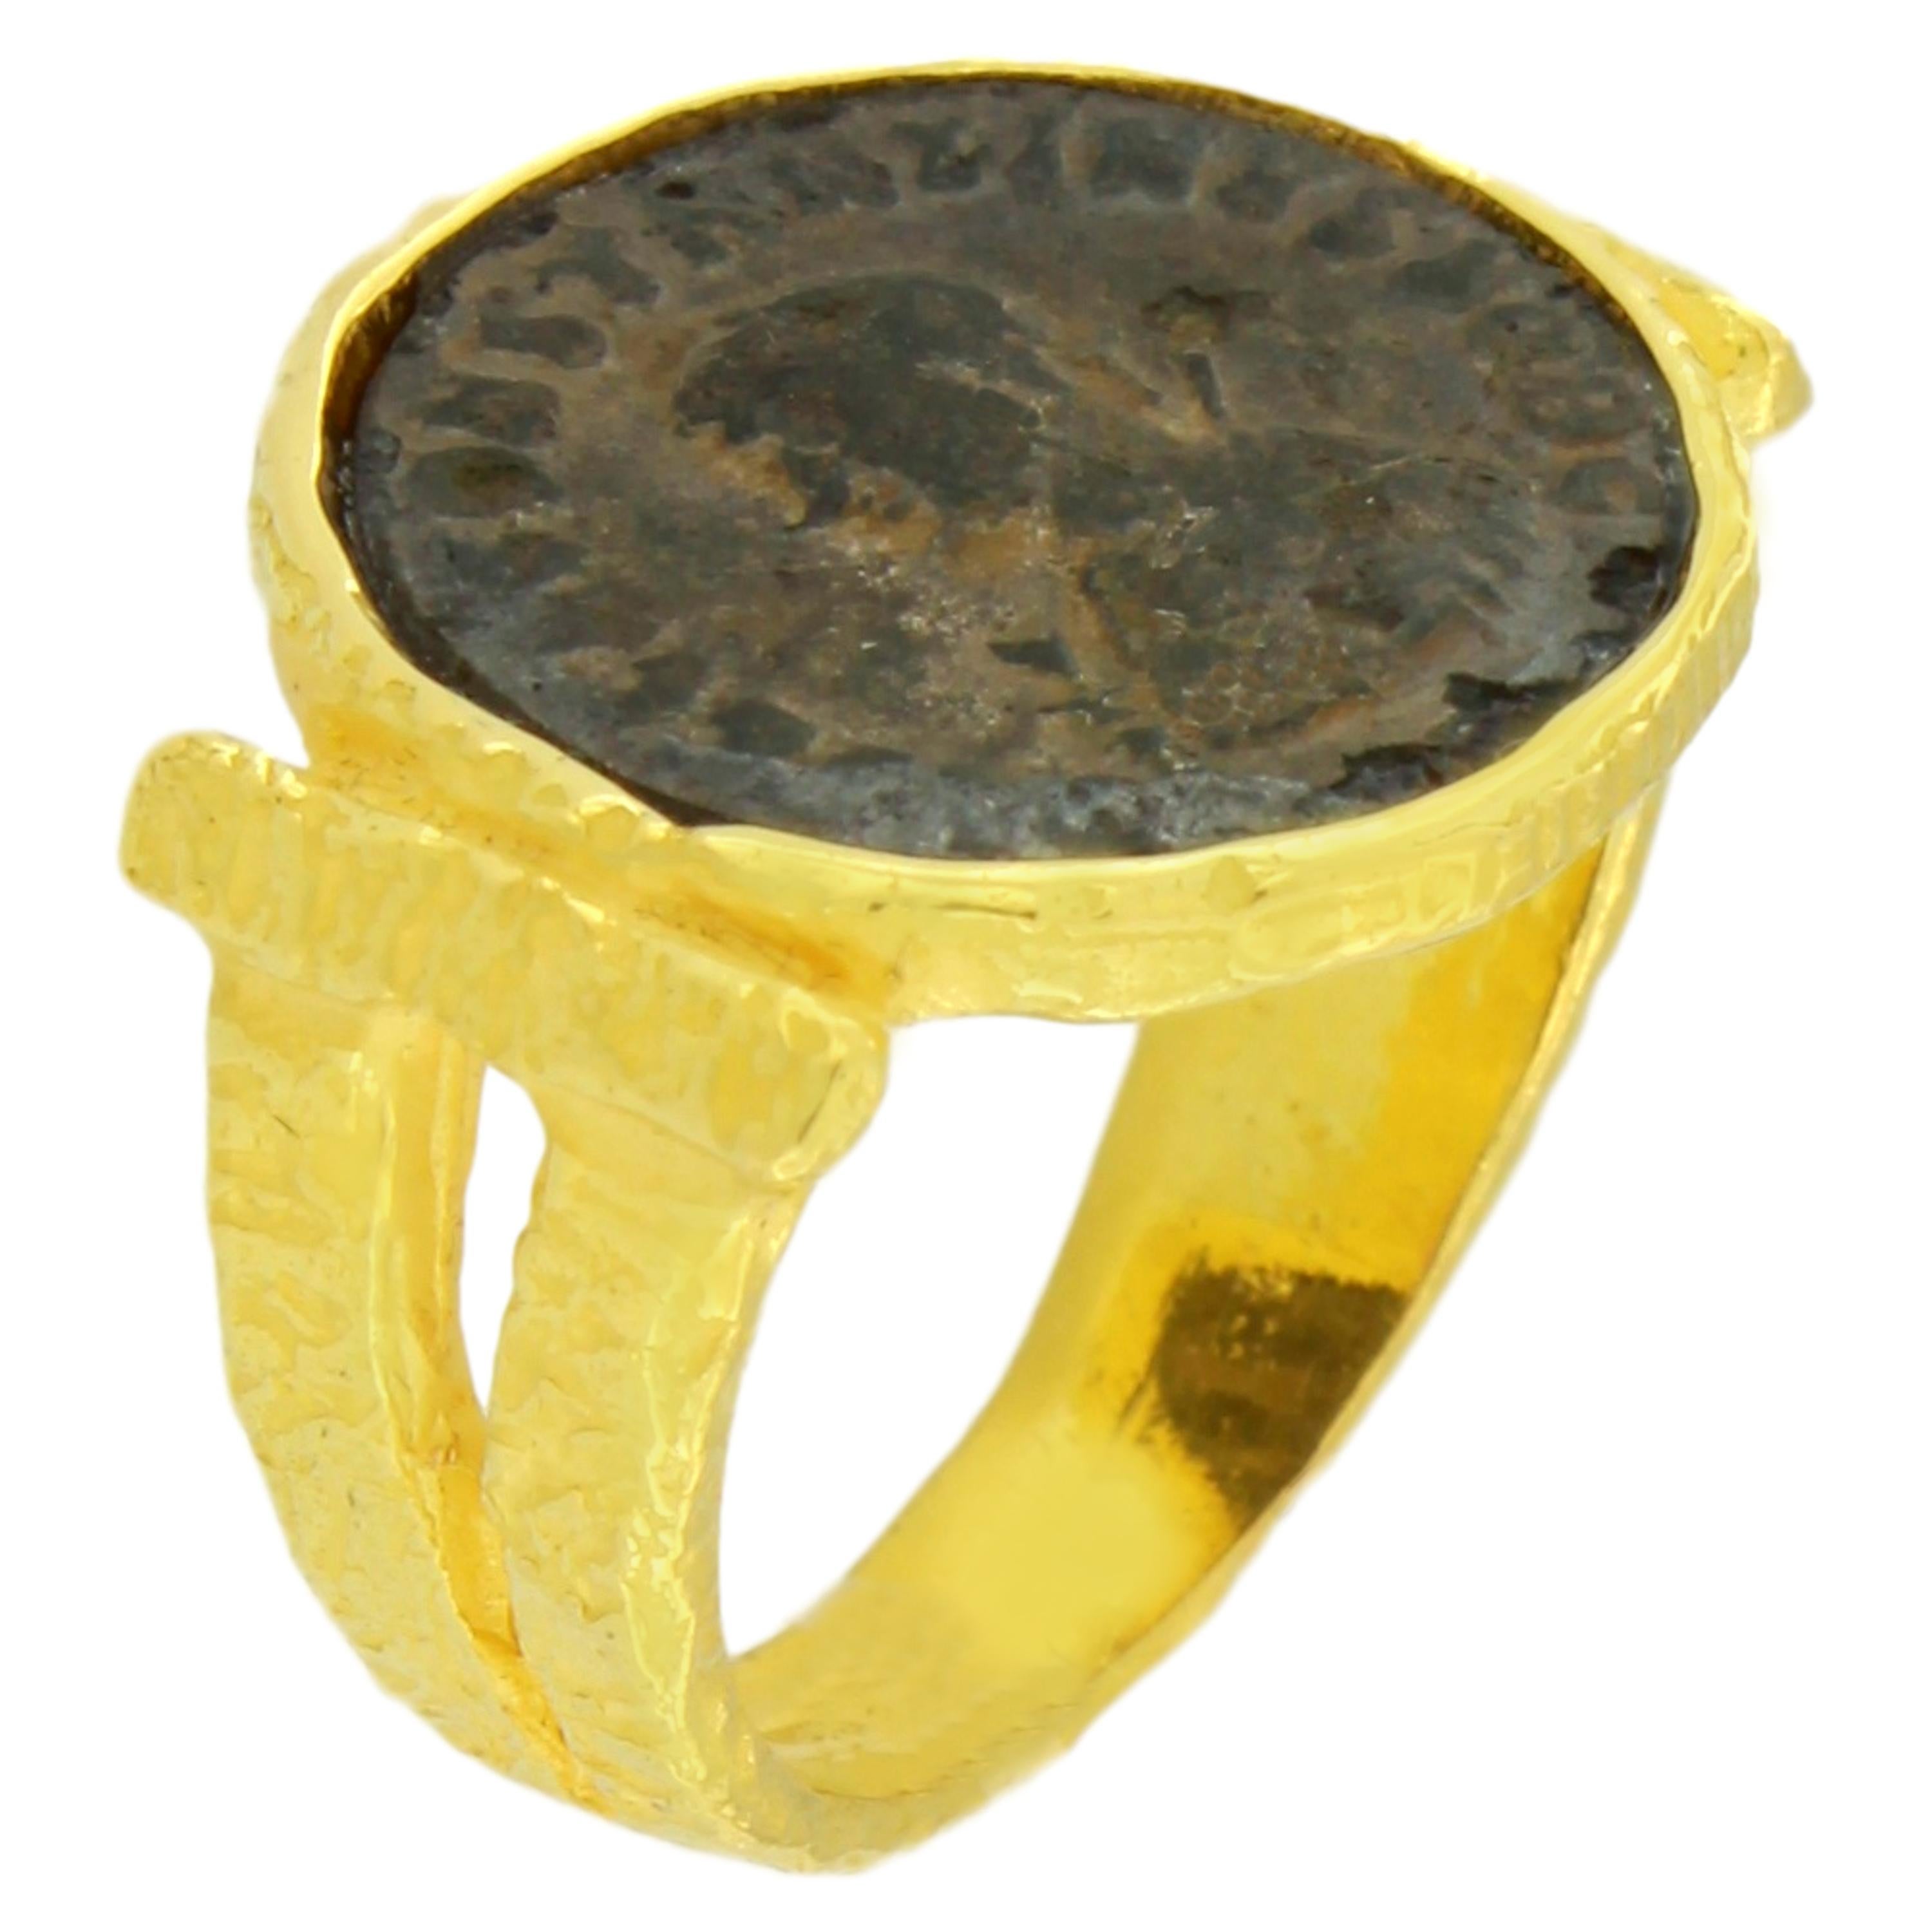 Sacchi Ancient Roman Coin Ring 18 Karat Satin Yellow Band Gold